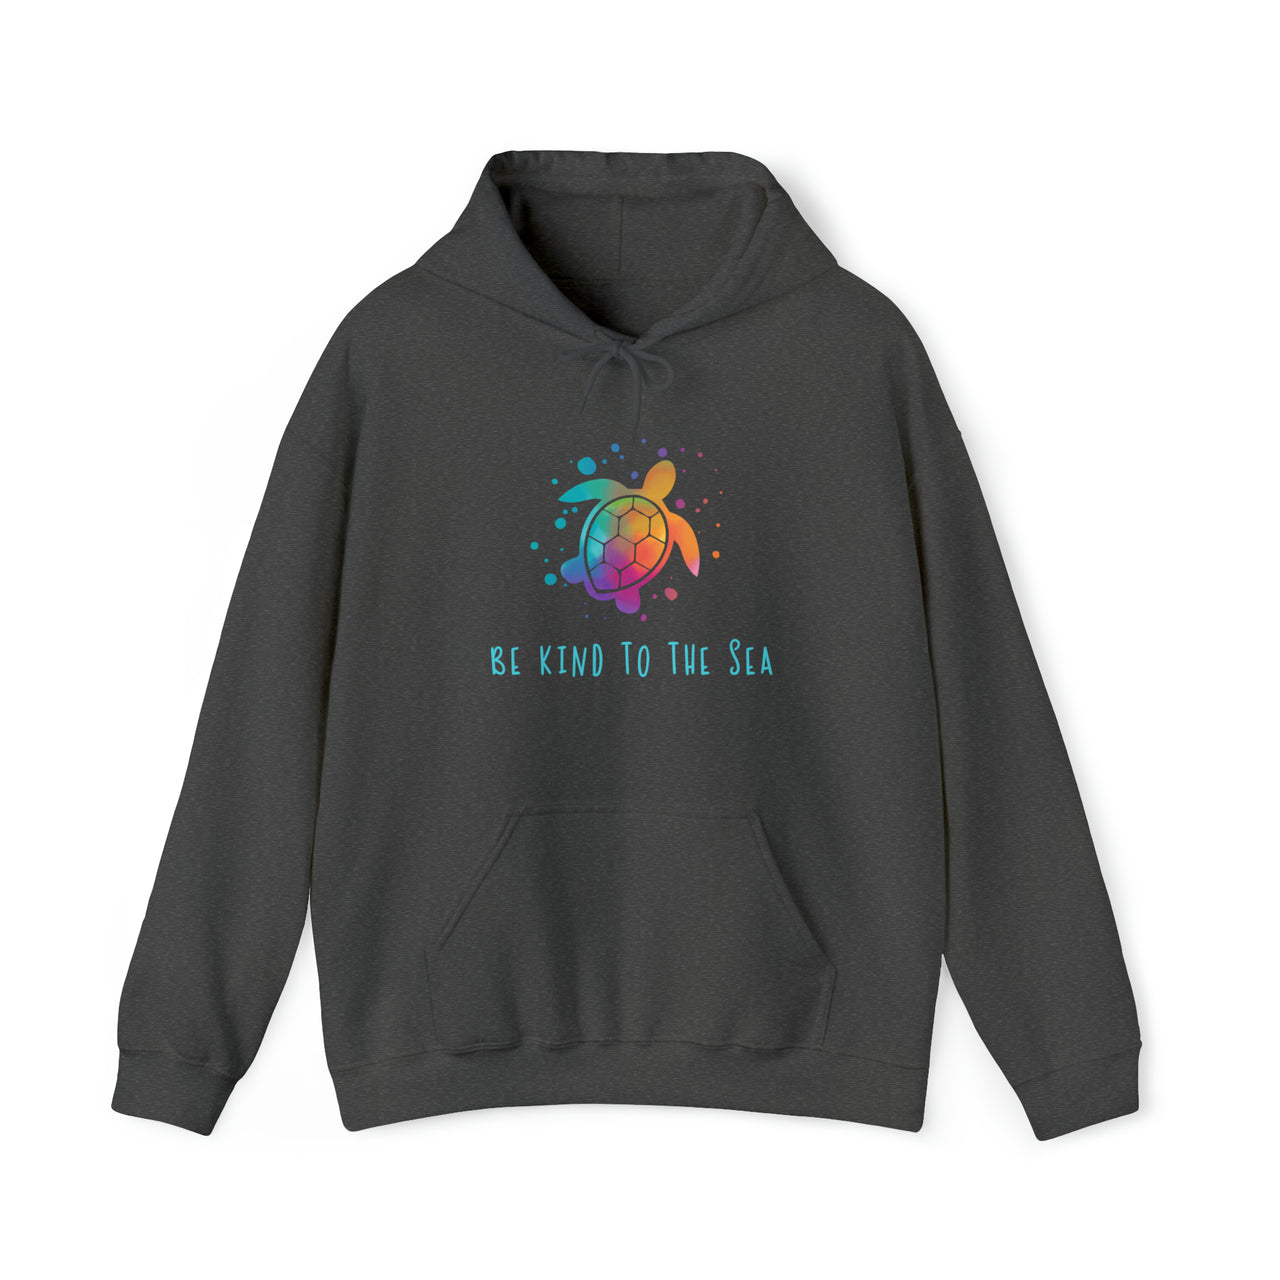 Be Kind to the Sea Hooded Sweatshirt, Unisex, Dark Heather